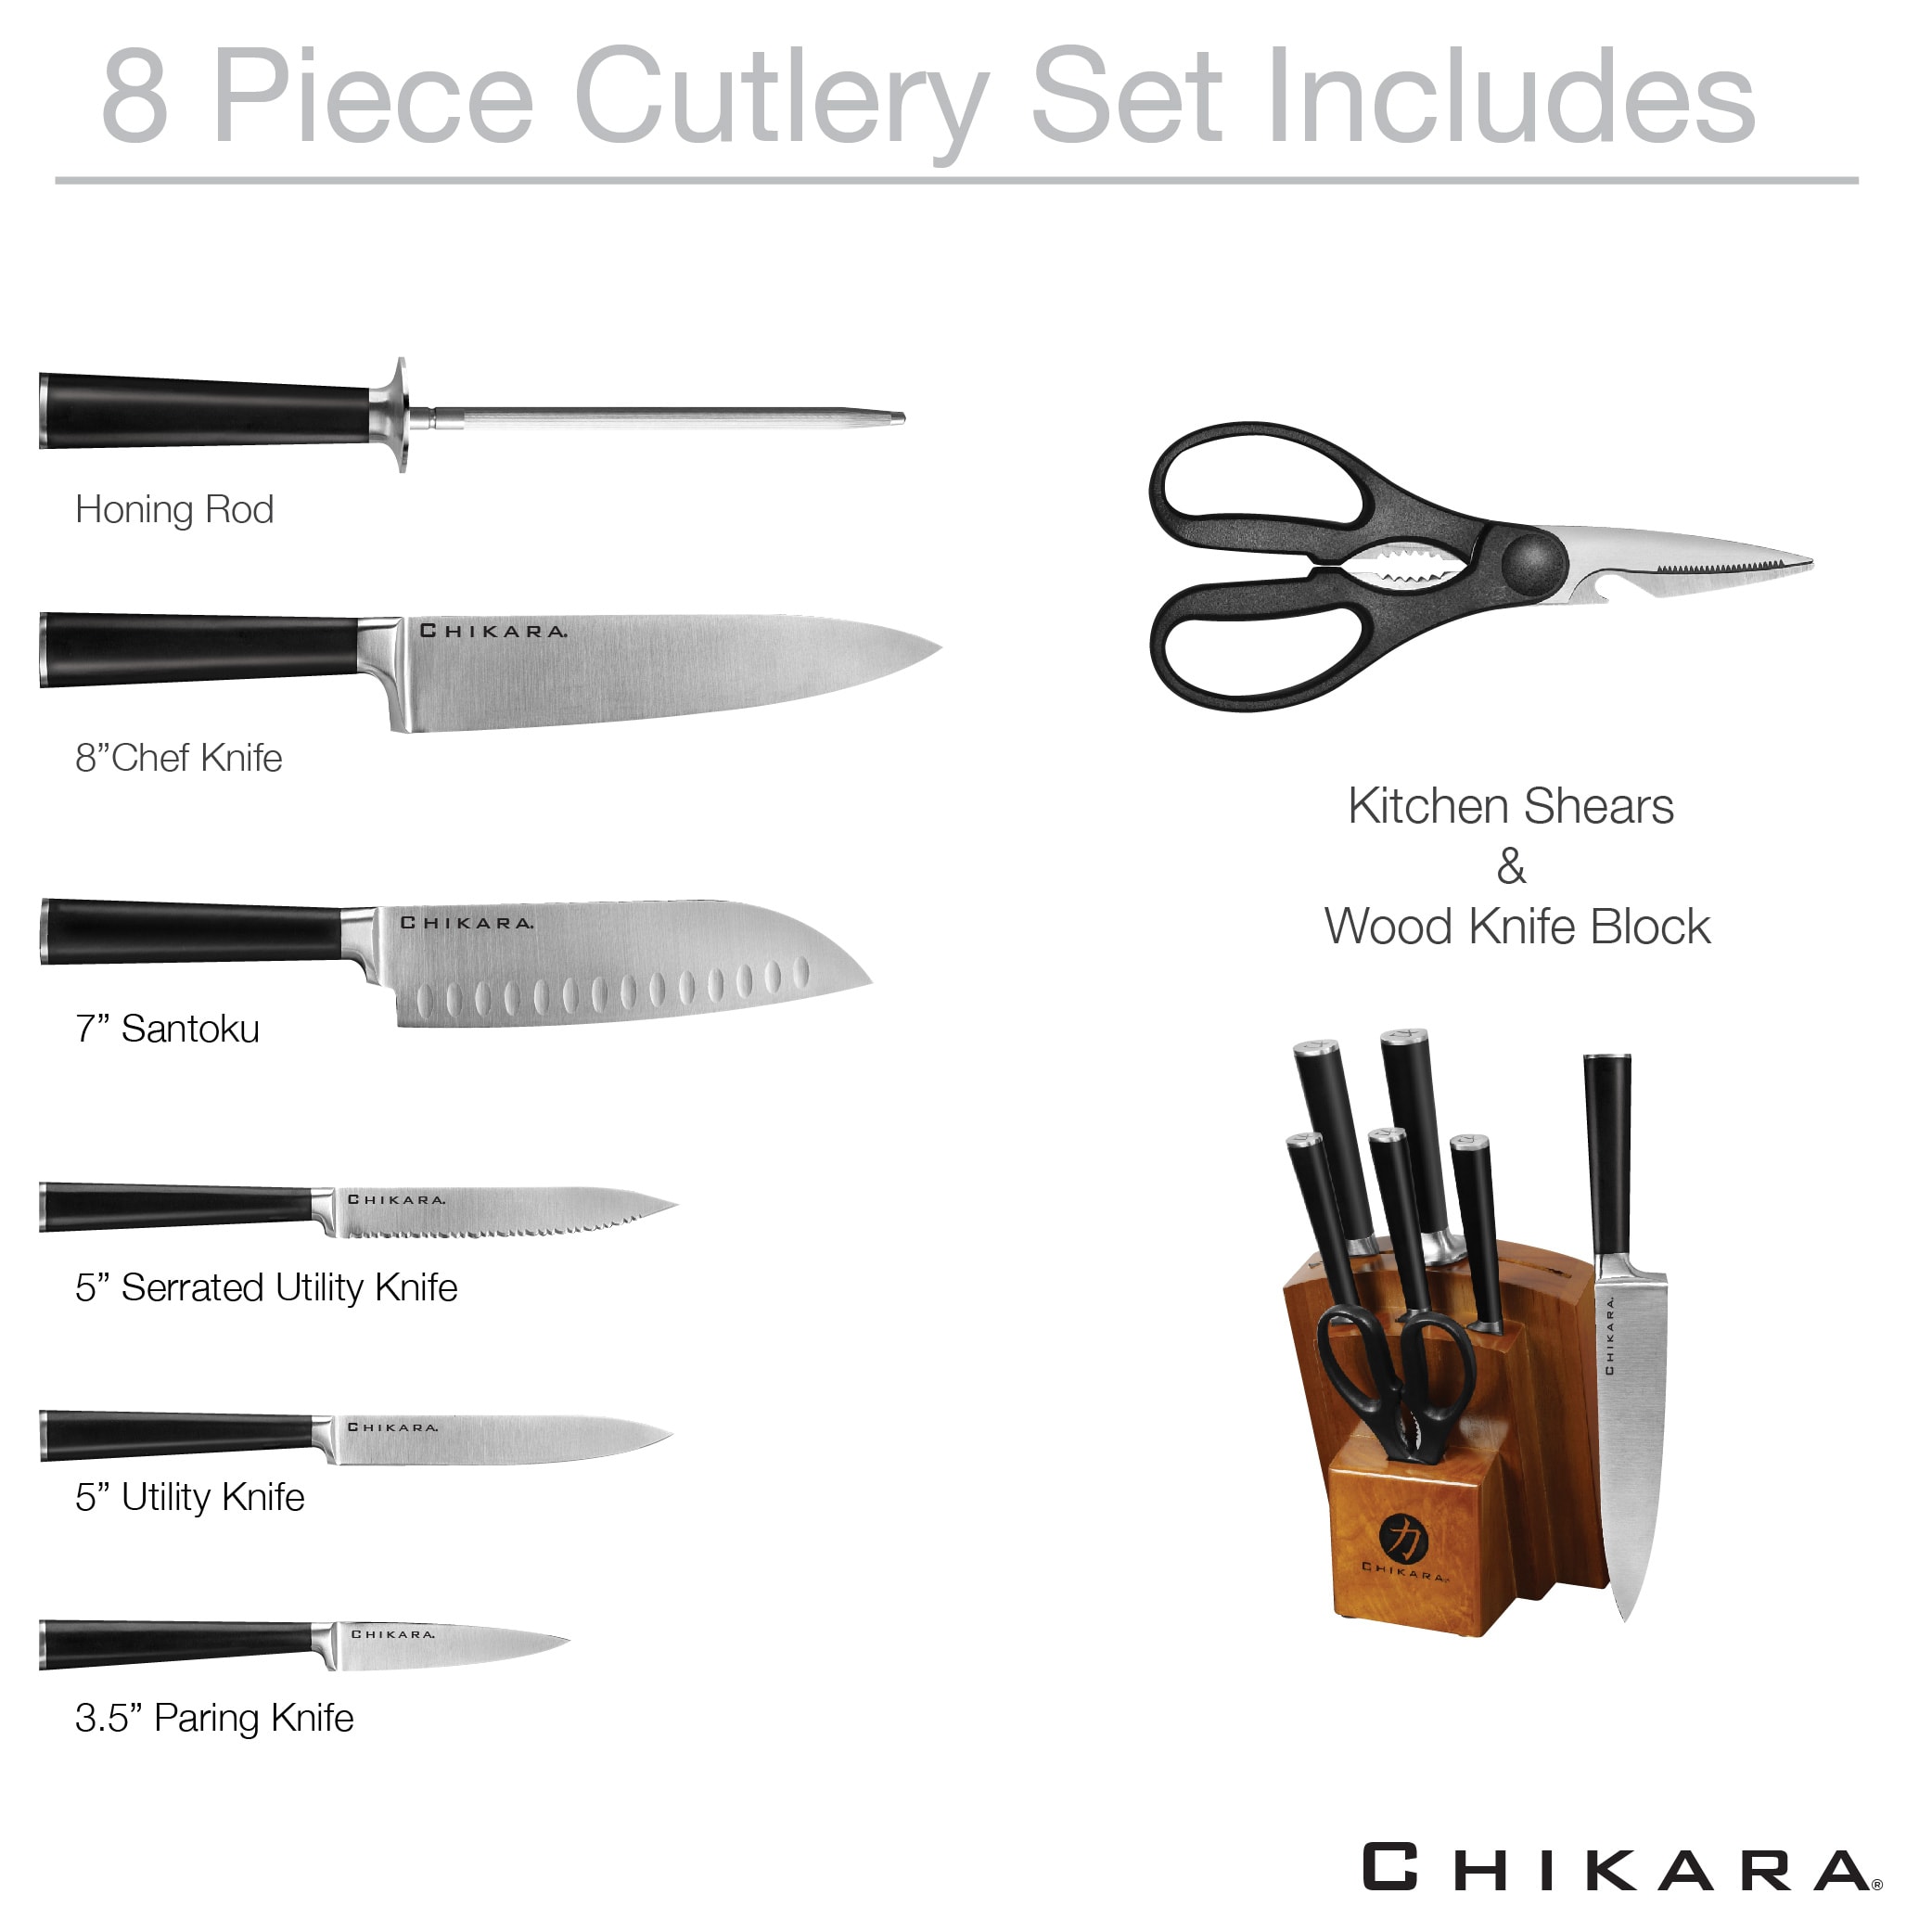 Ginsu Chikara Series 8 Piece Cutlery Set (Toffee Block)